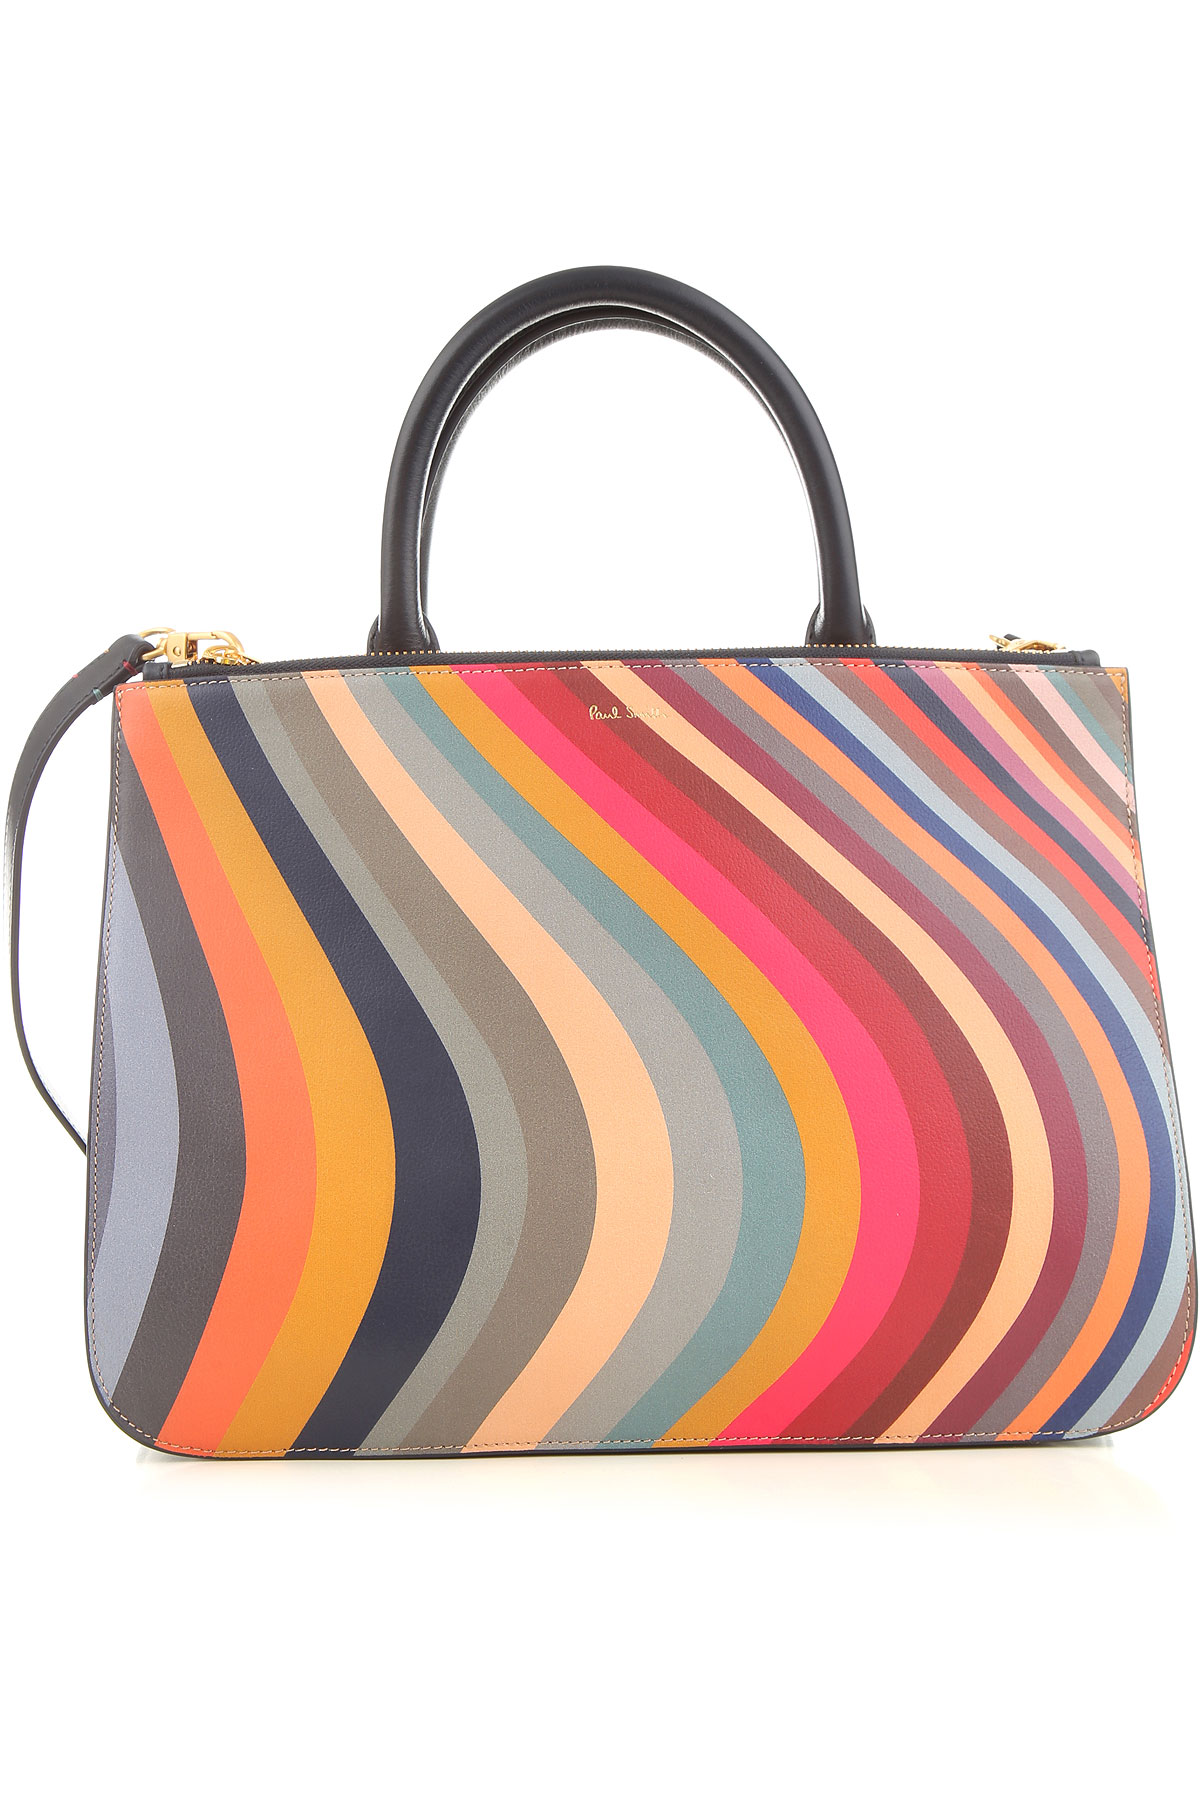 Paul Smith Tote Bag, Multicolor, Leather, 2021 on Raffaello Network |  AccuWeather Shop